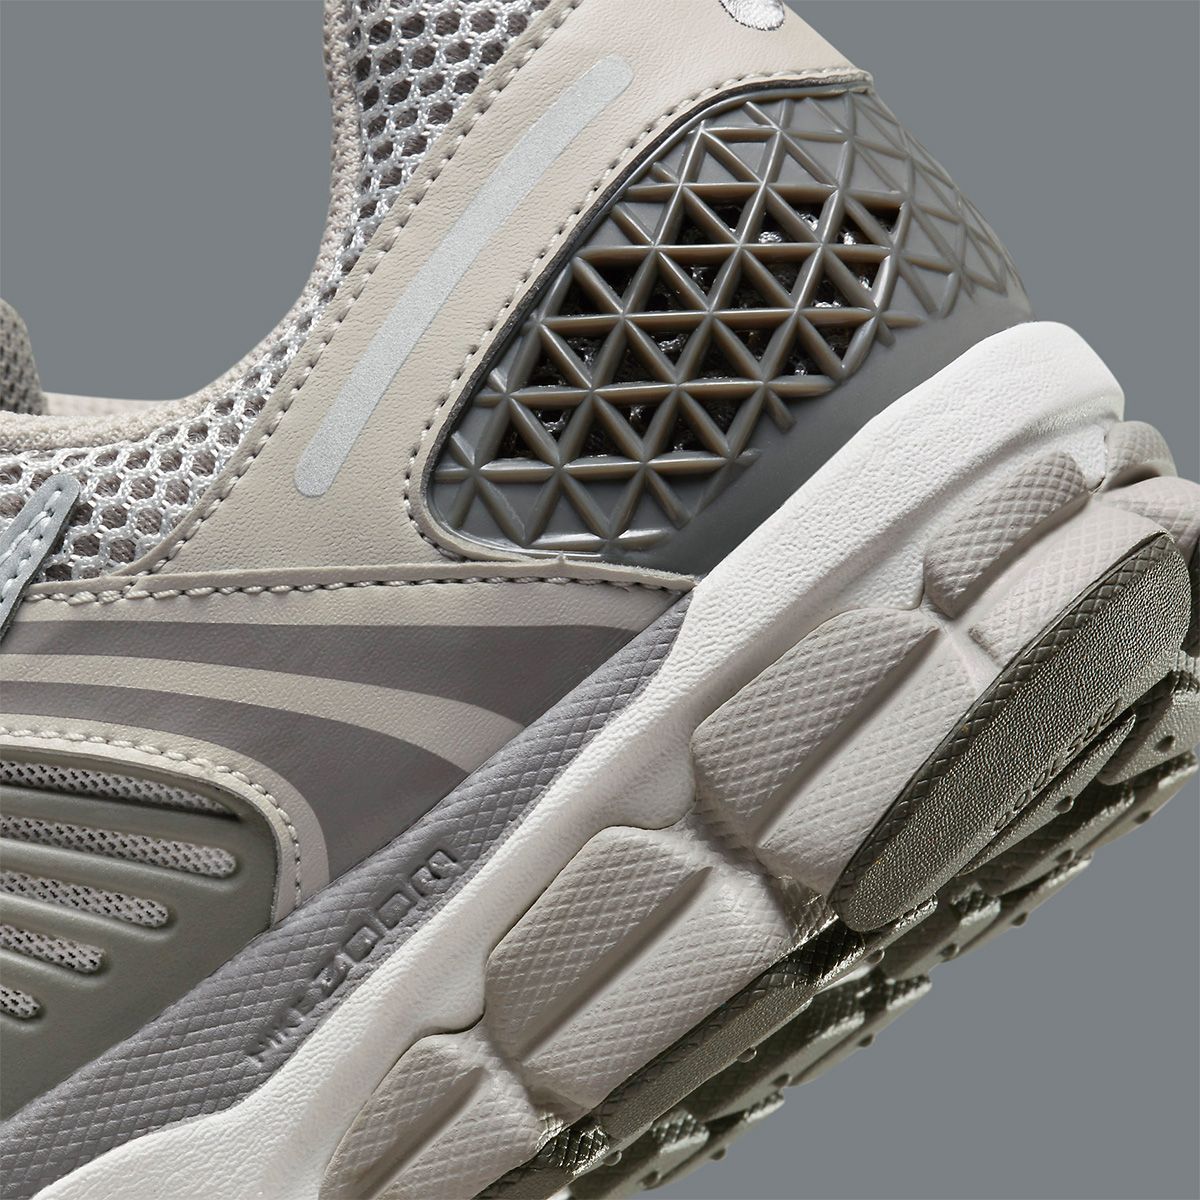 First Looks // Nike Zoom Vomero 5 “Bone Beige” | LaptrinhX / News